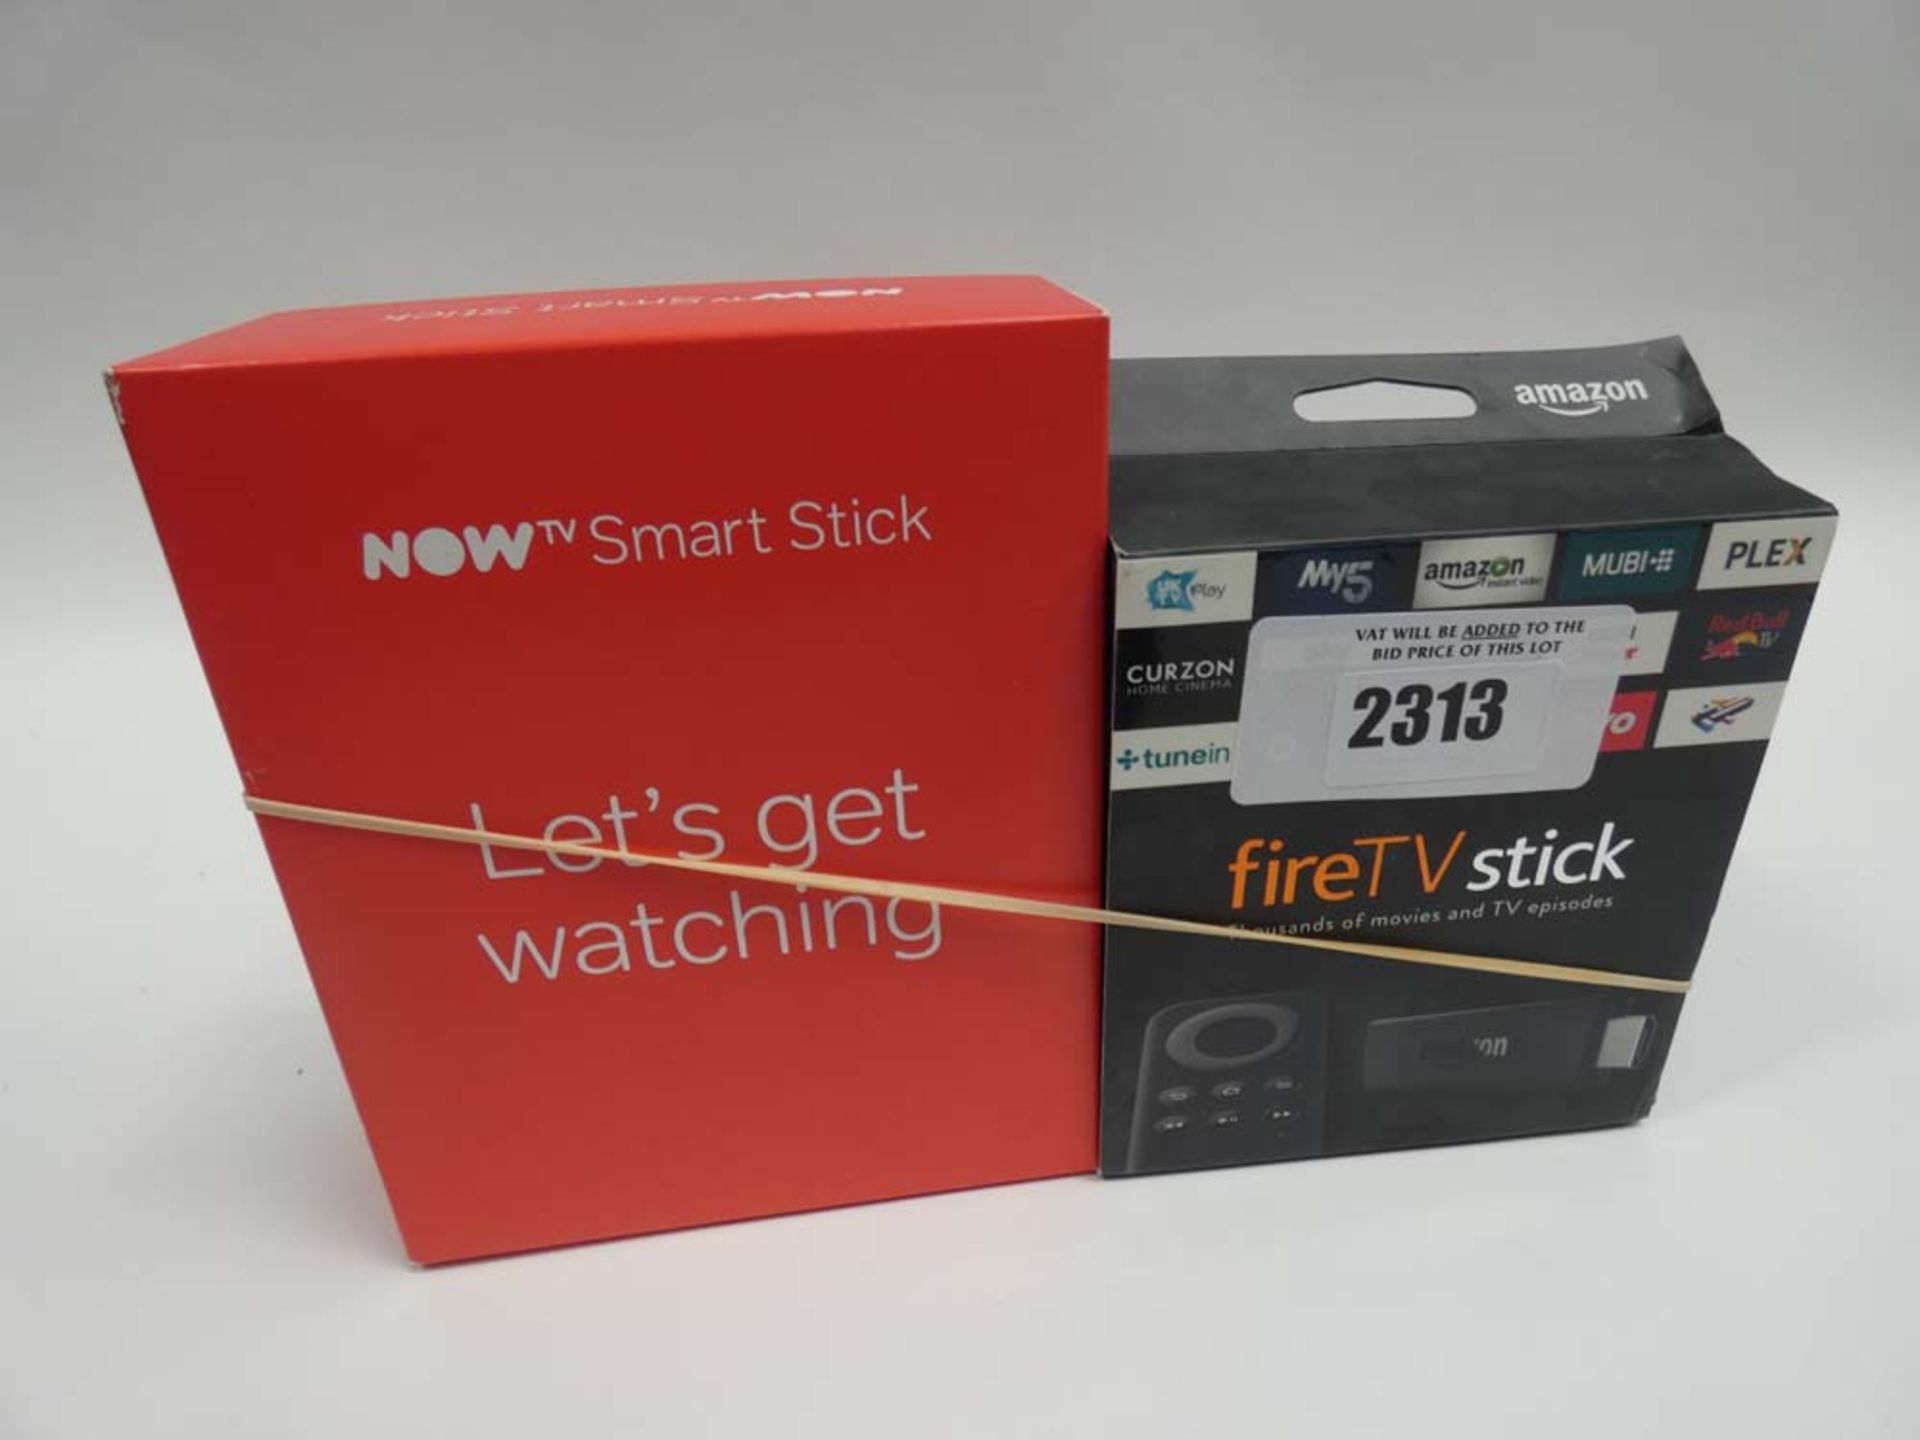 Amazon FireTV Stick and NowTV Smart Stick